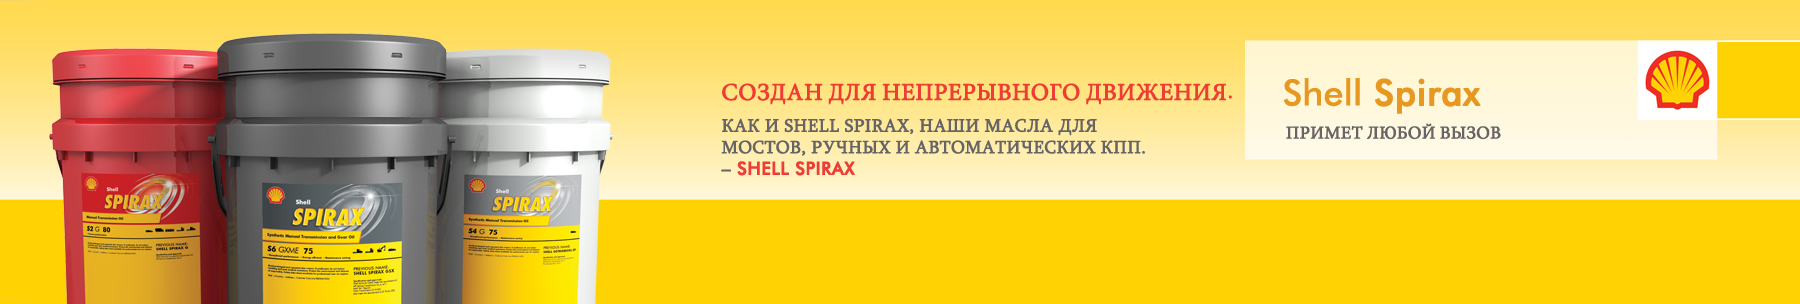 shell_spirax_ru